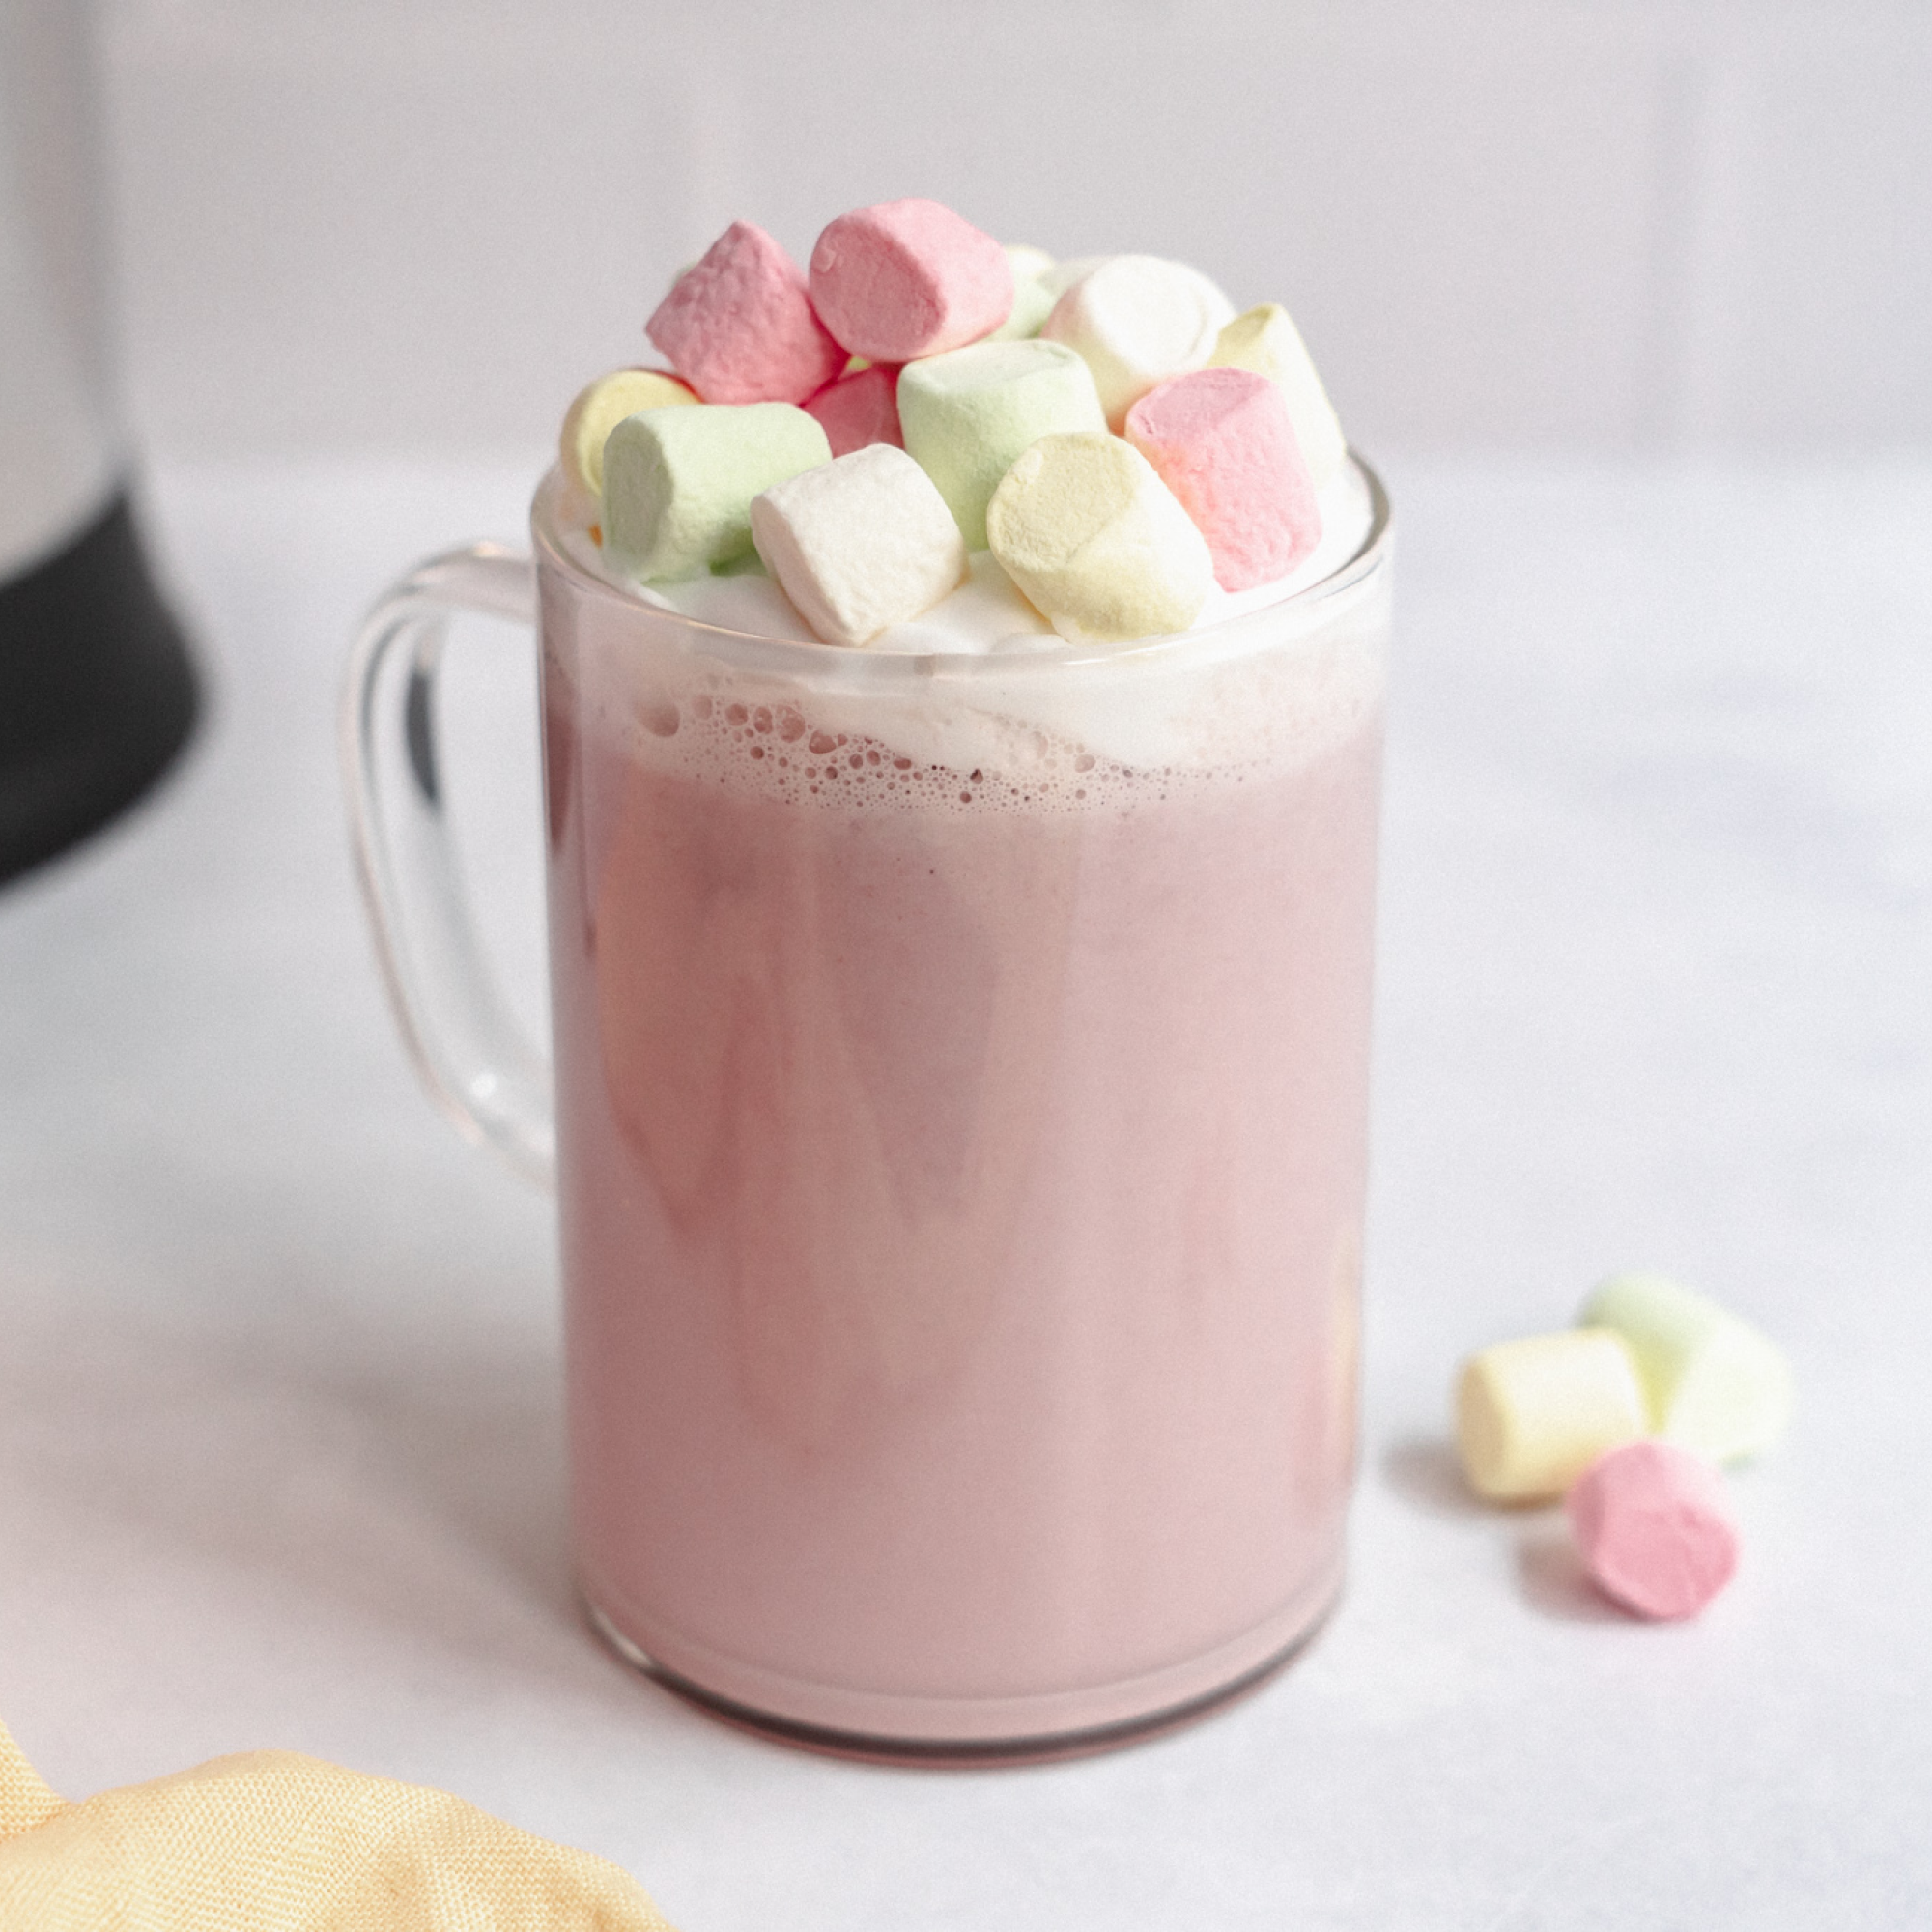 Unicorn Hot Chocolate: Healthy, Creamy & Sweet